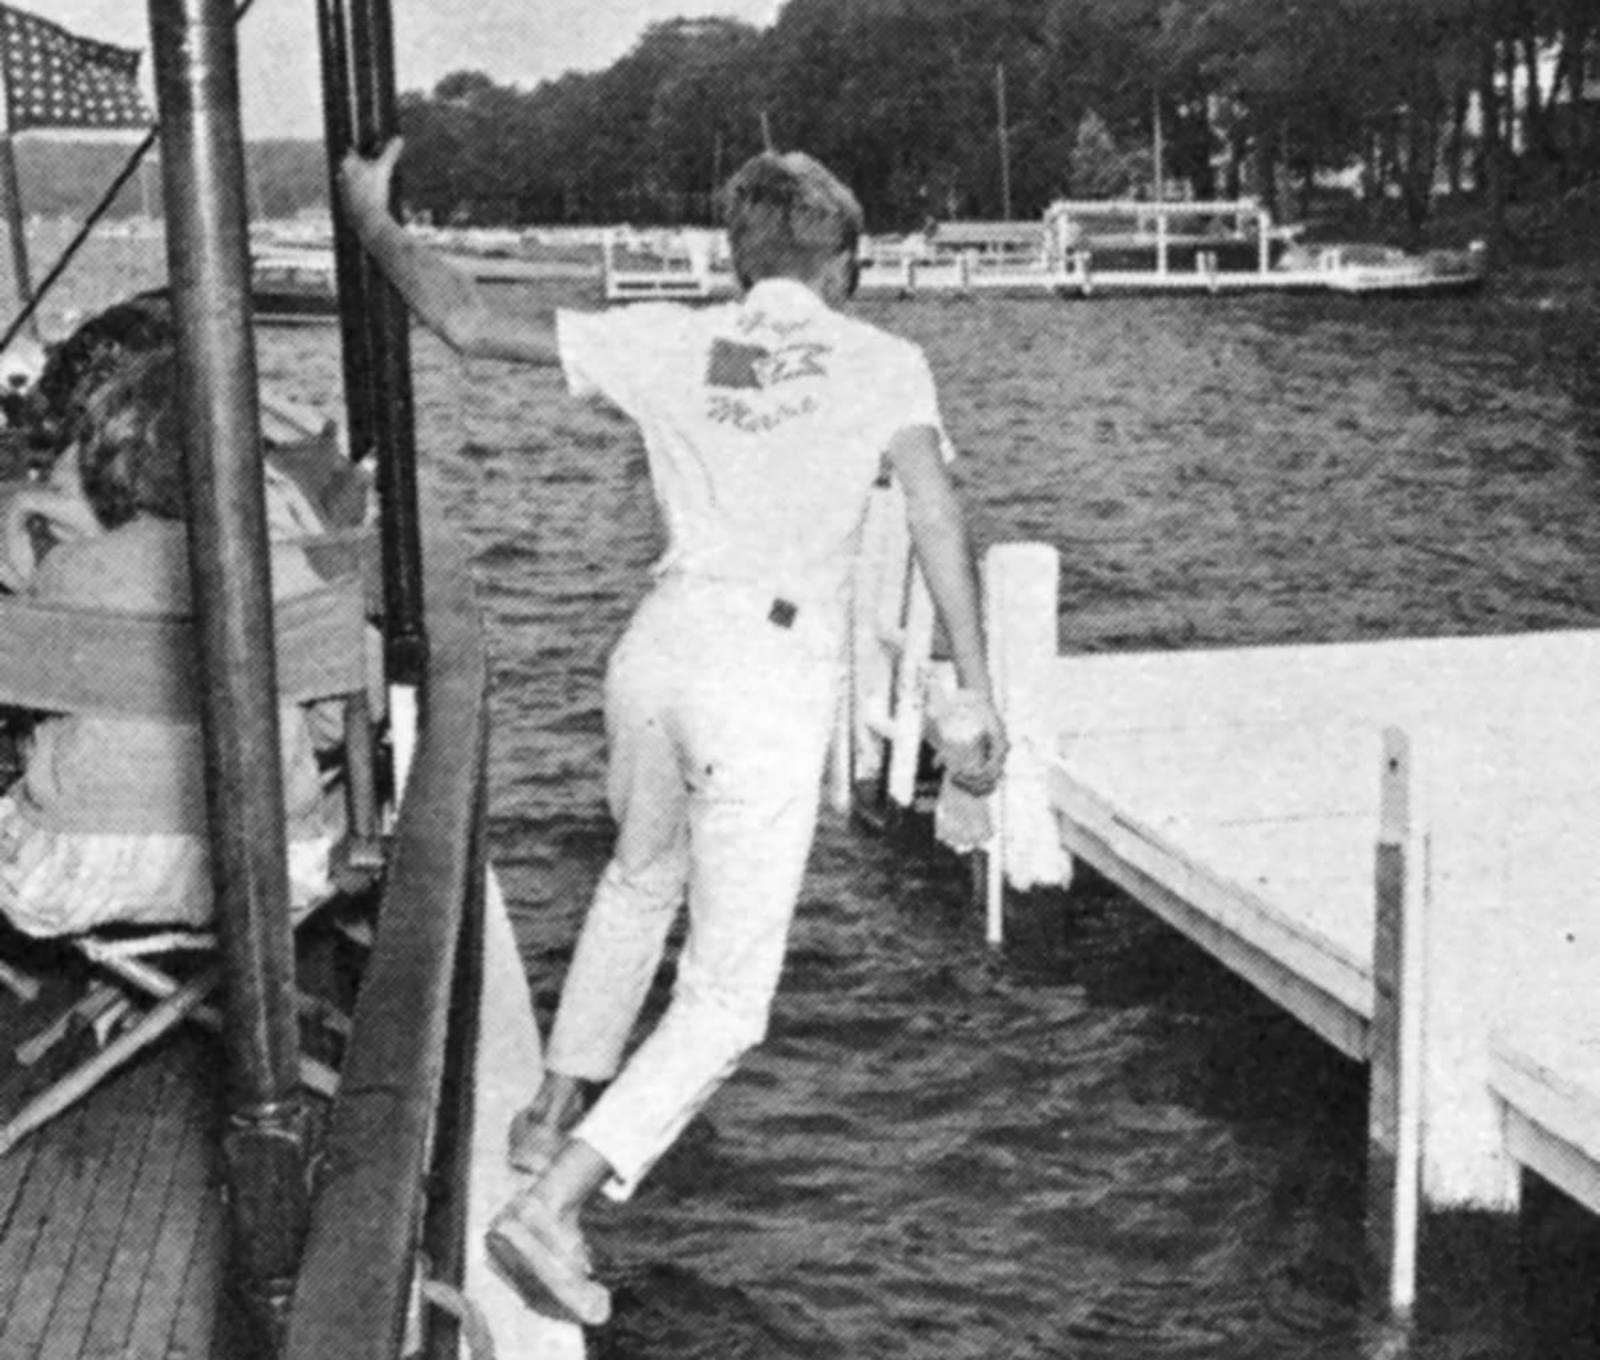 Mailboat jumper in 1950s